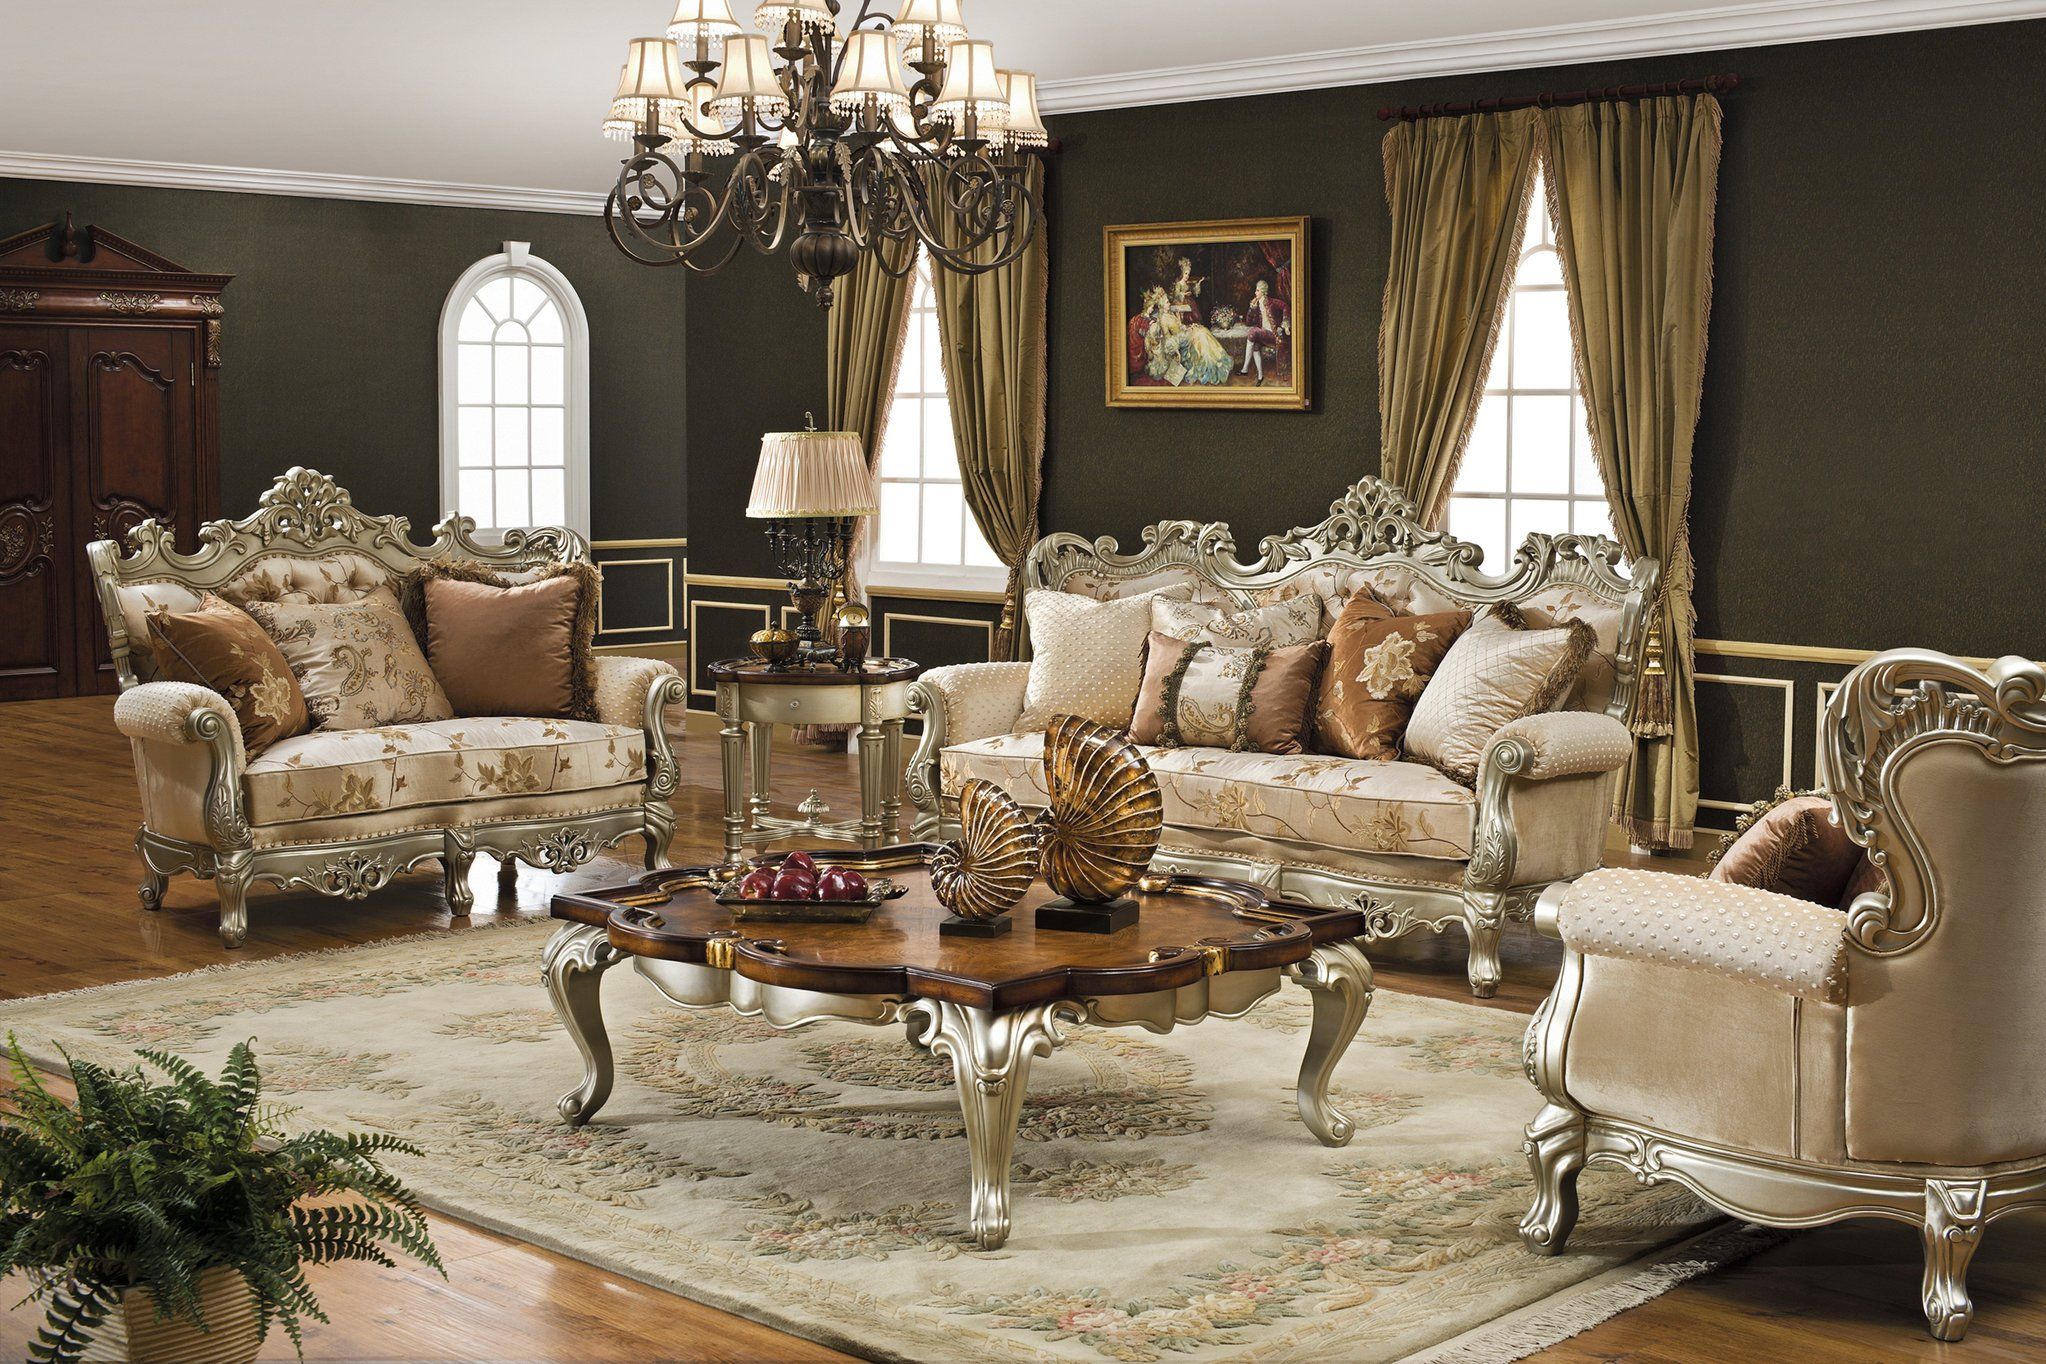 Get the pocket-friendly living room furniture in Liberal, KS